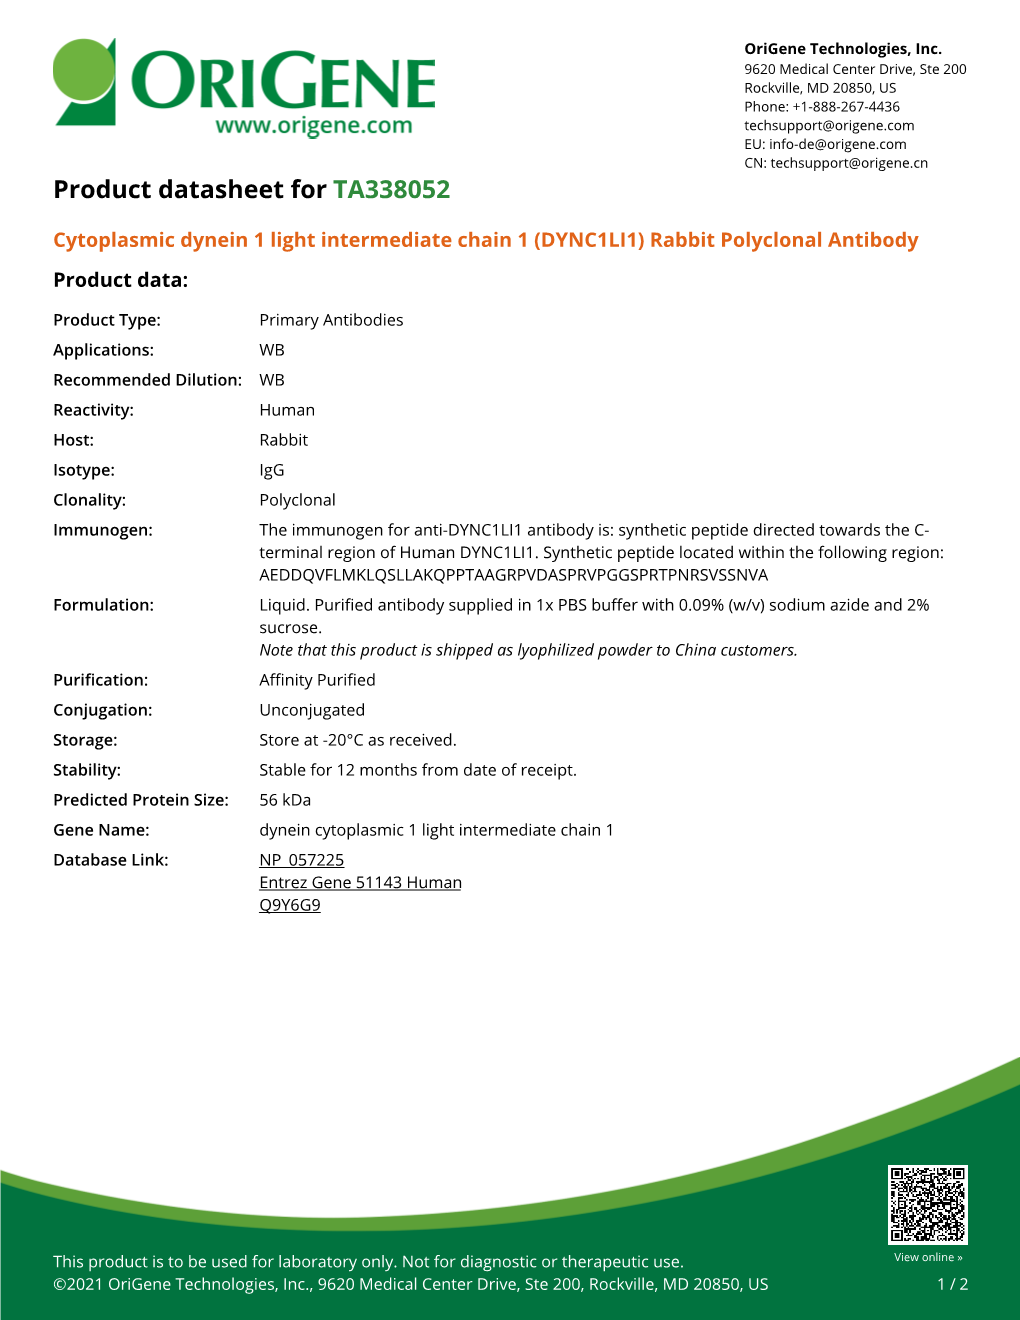 (DYNC1LI1) Rabbit Polyclonal Antibody – TA338052